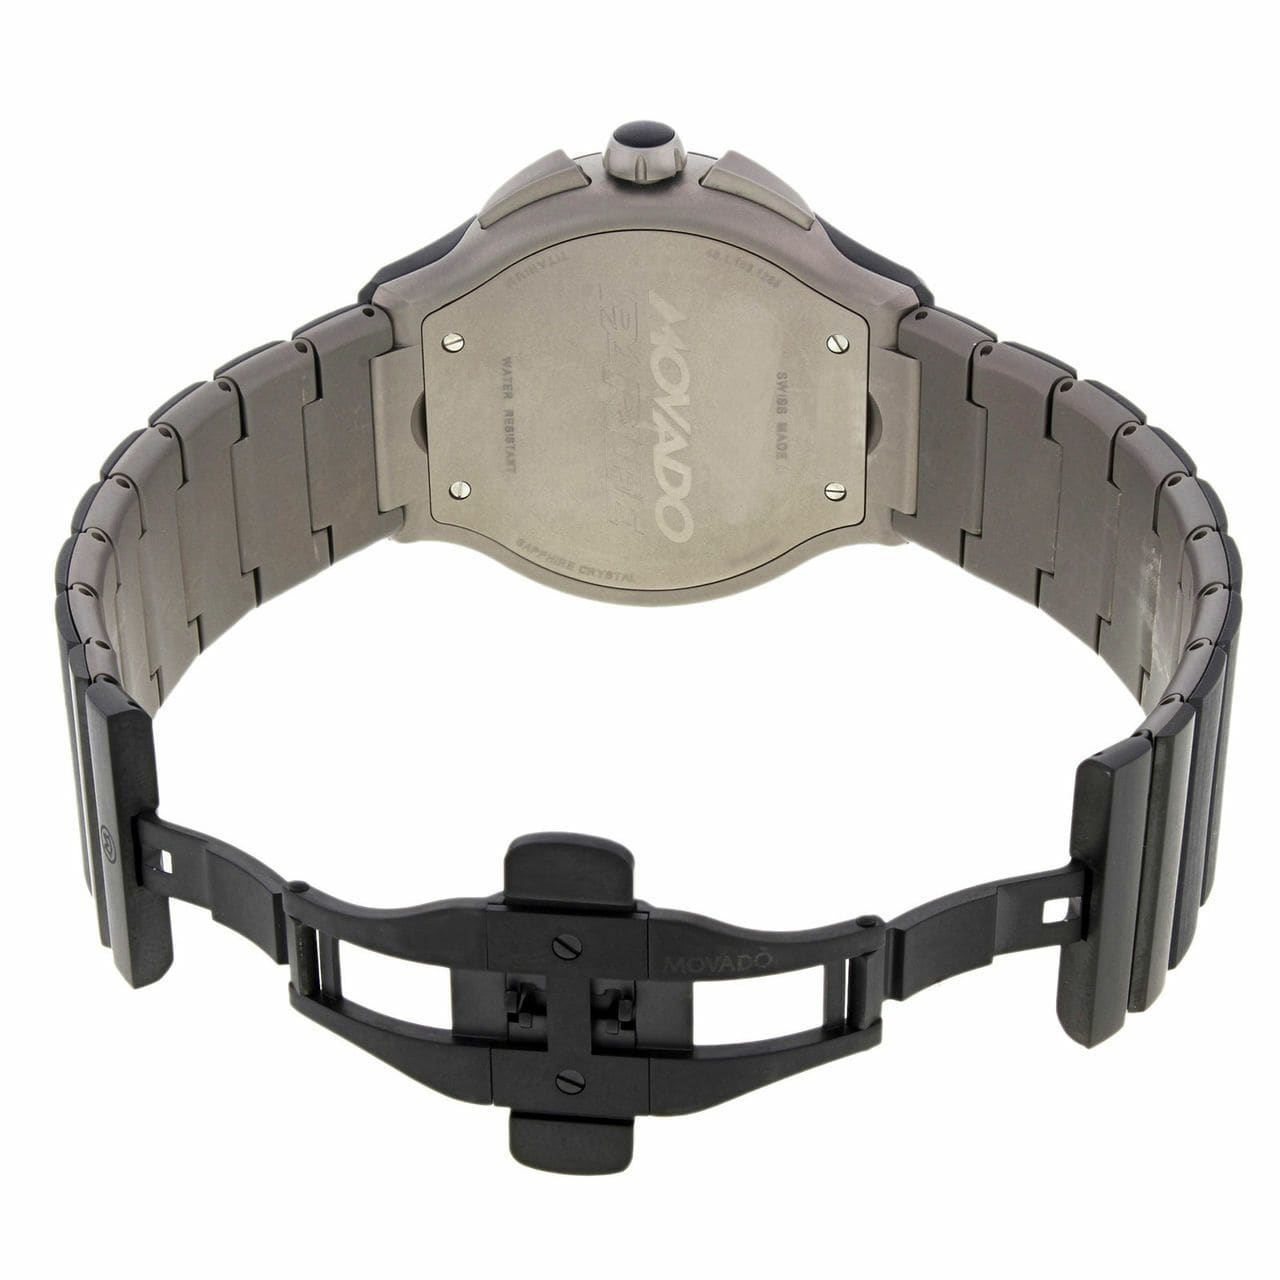 Movado Parlee Chronograph Carbon Fiber Dial Titanium Peek Quartz Watch 0606929 885997146692